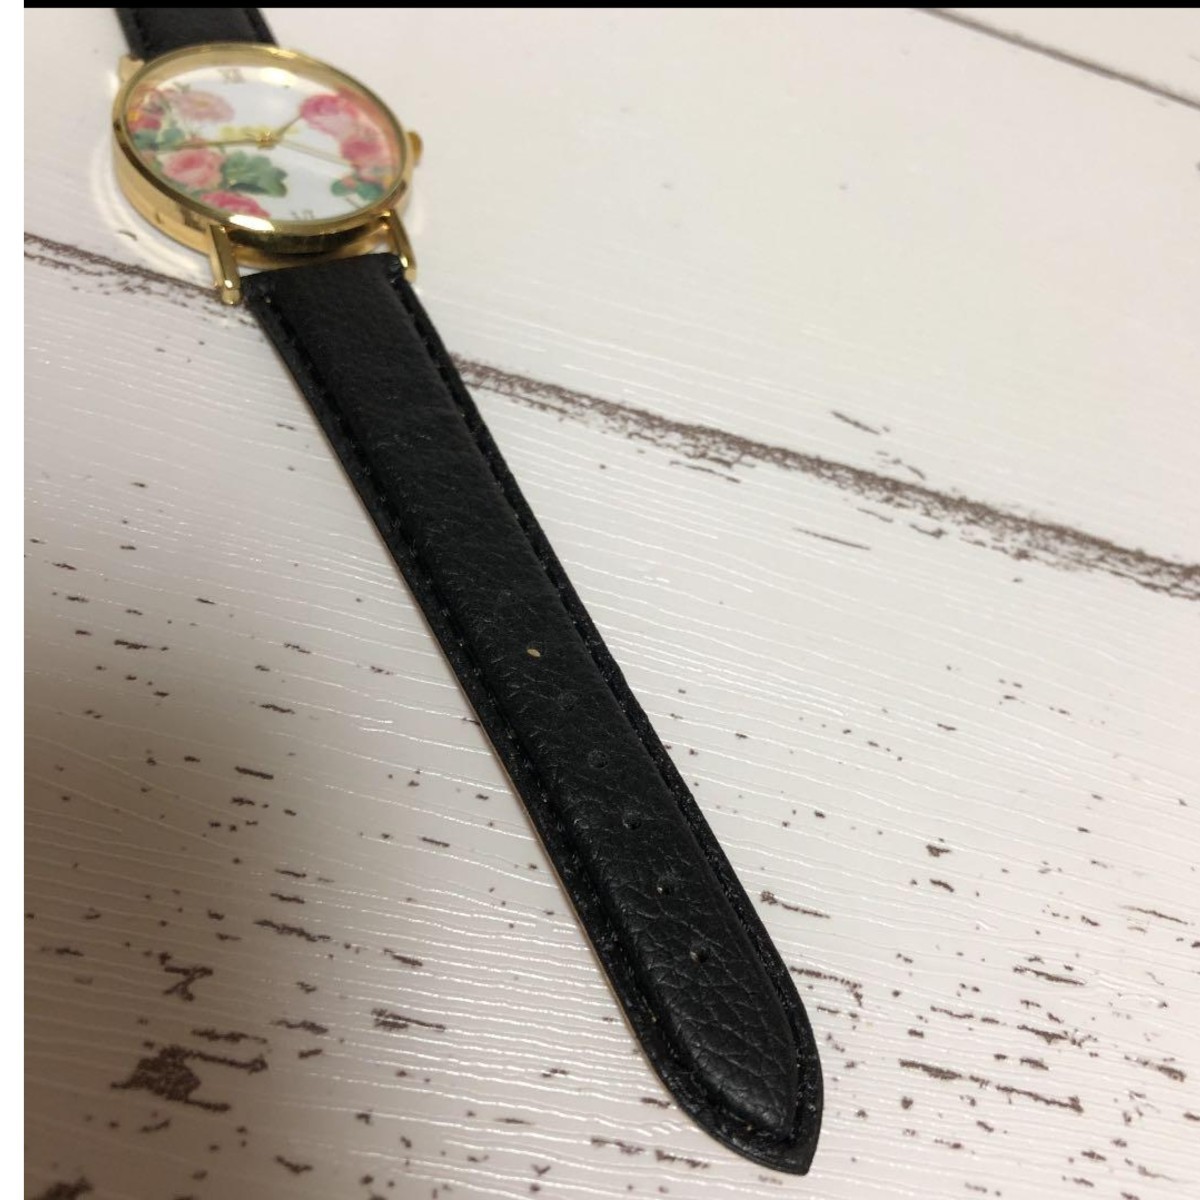 A26 新品 腕時計 時計 ブラック 黒 薔薇 ばら アクセサリー アナログ ファッション雑貨 小物 レディース _画像5